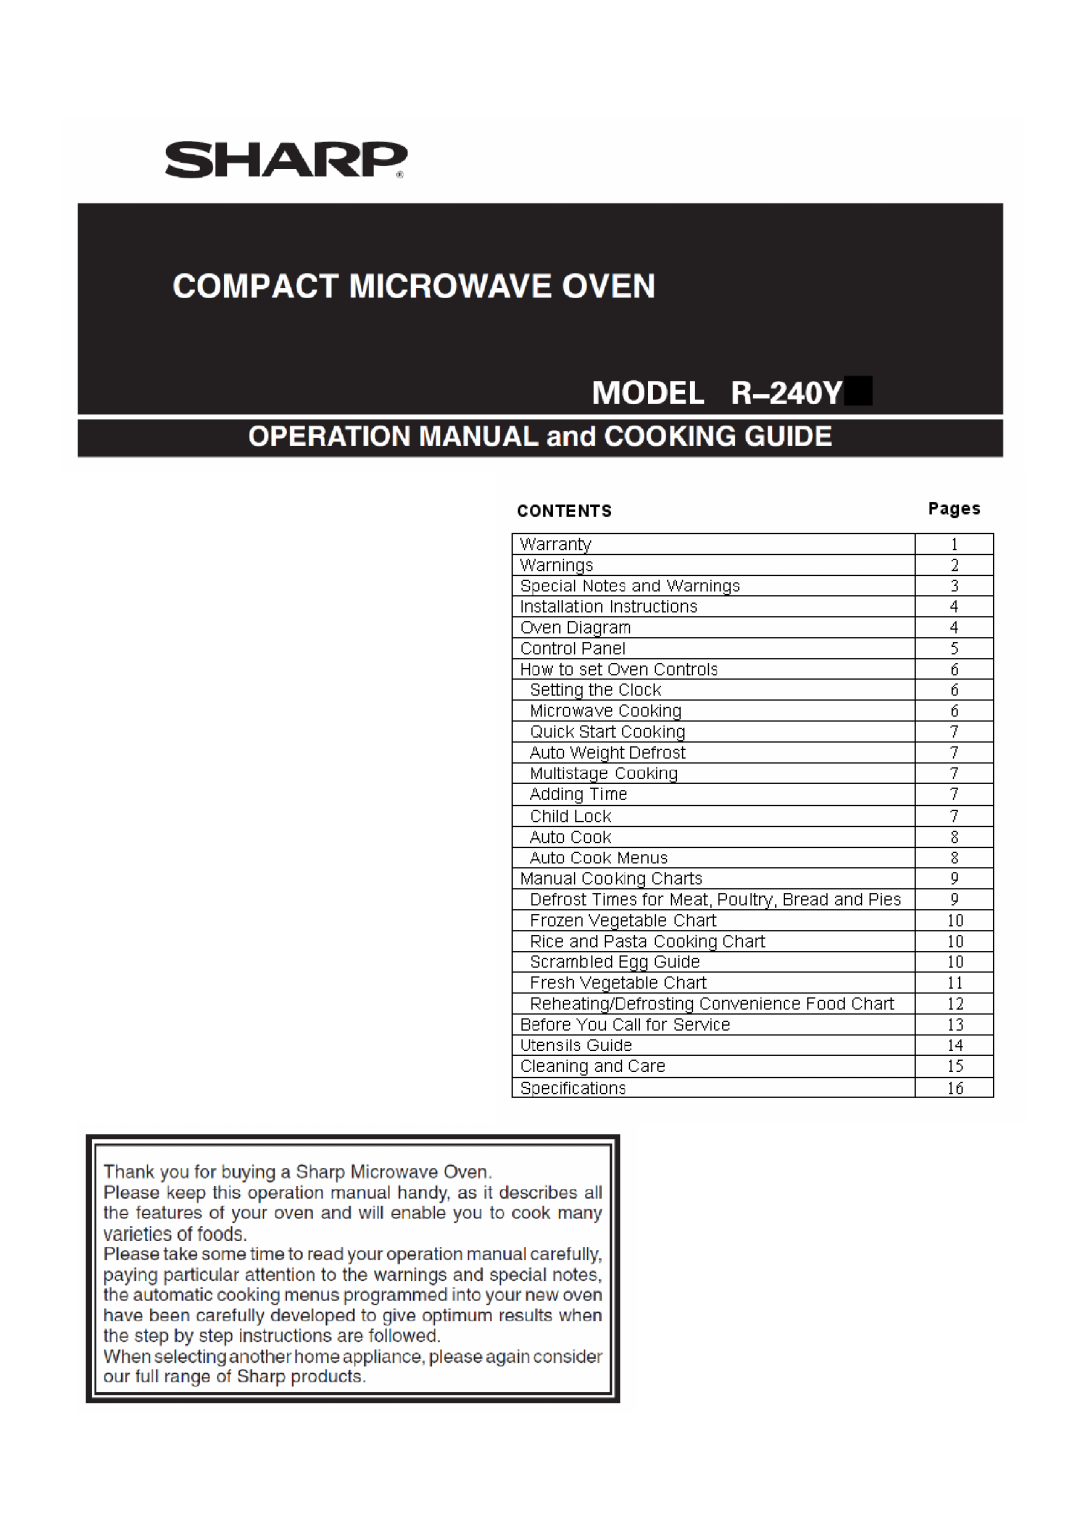 Sharp Microwave Oven manual 